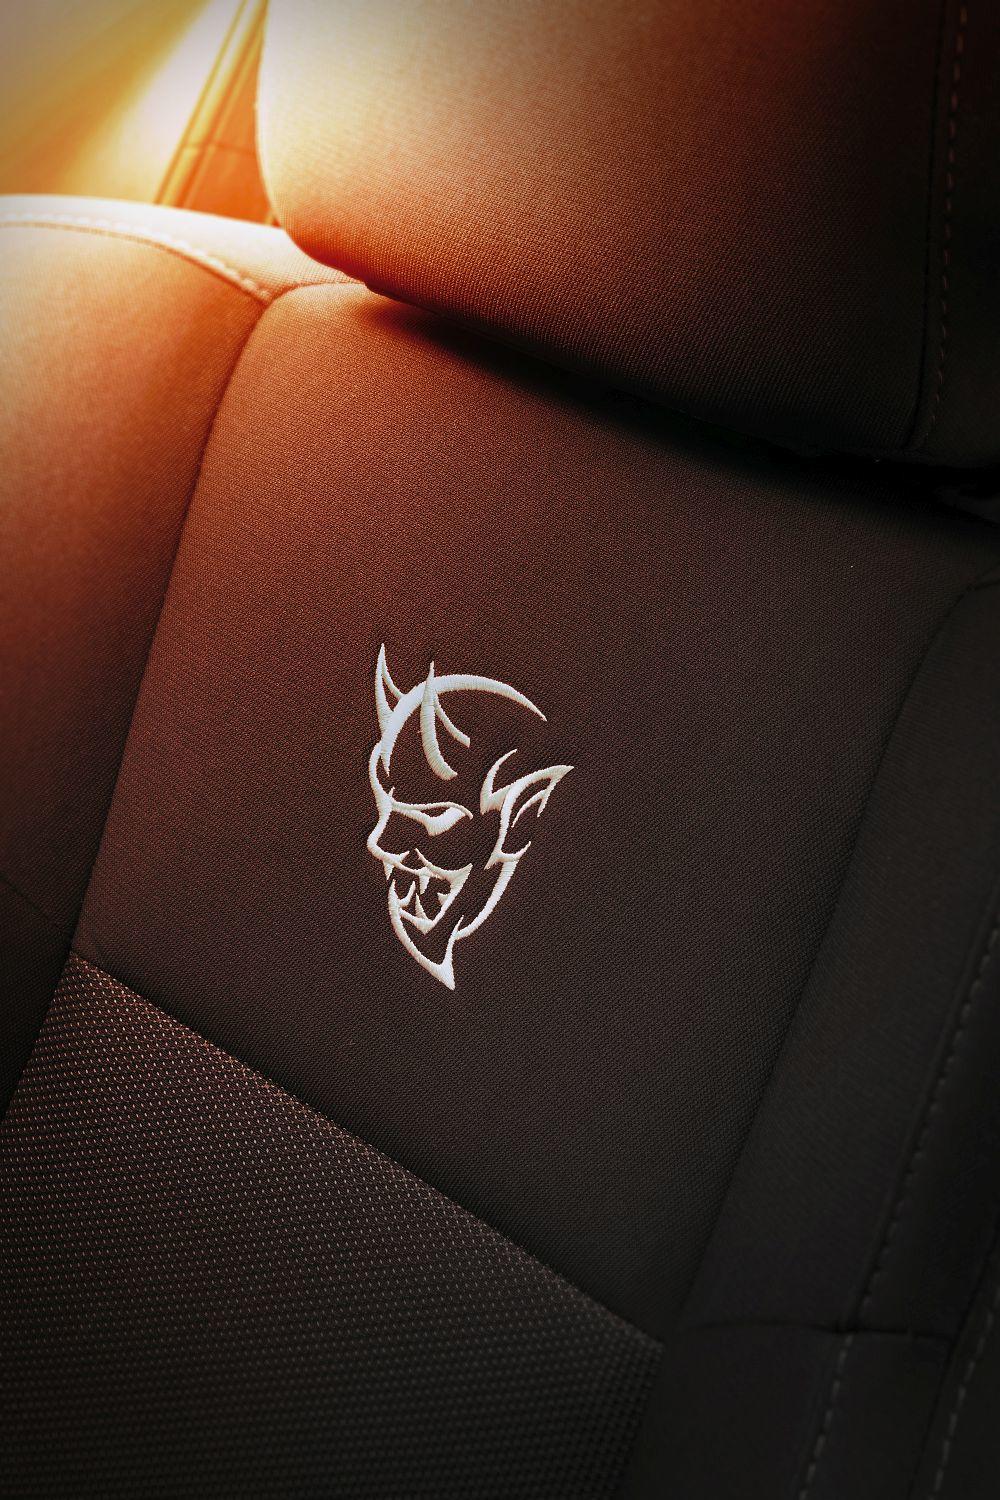 Front seat(s) in 2018 Dodge Challenger SRT Demon feature standar